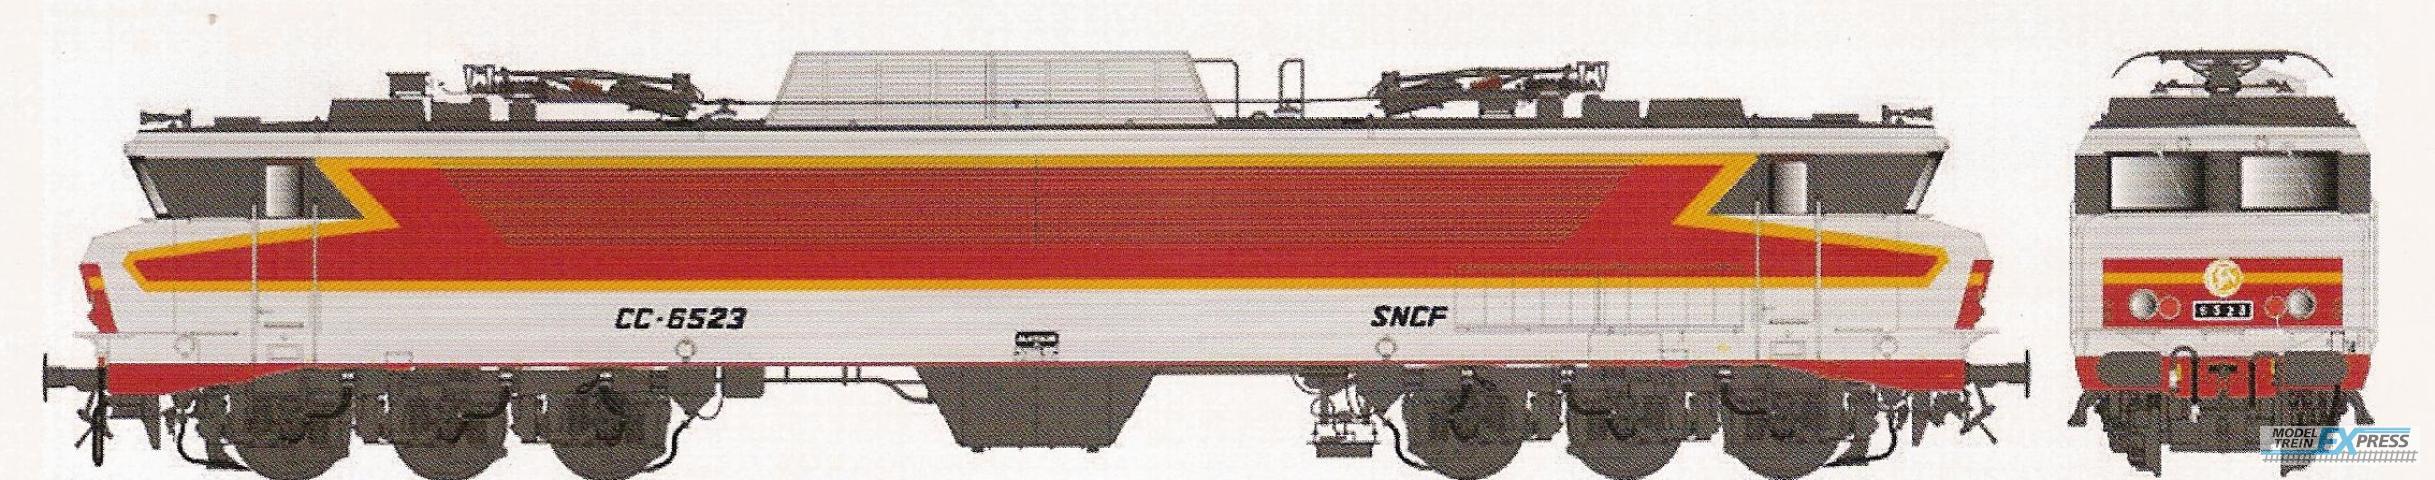 LS Models 10322S CC 6523, metaalgrijs/rood/oranje, TEE, platen, Beffara logo, zuid west, 200 km/h  /  Ep. IV  /  SNCF  /  HO  /  DC SOUND  /  1 P.